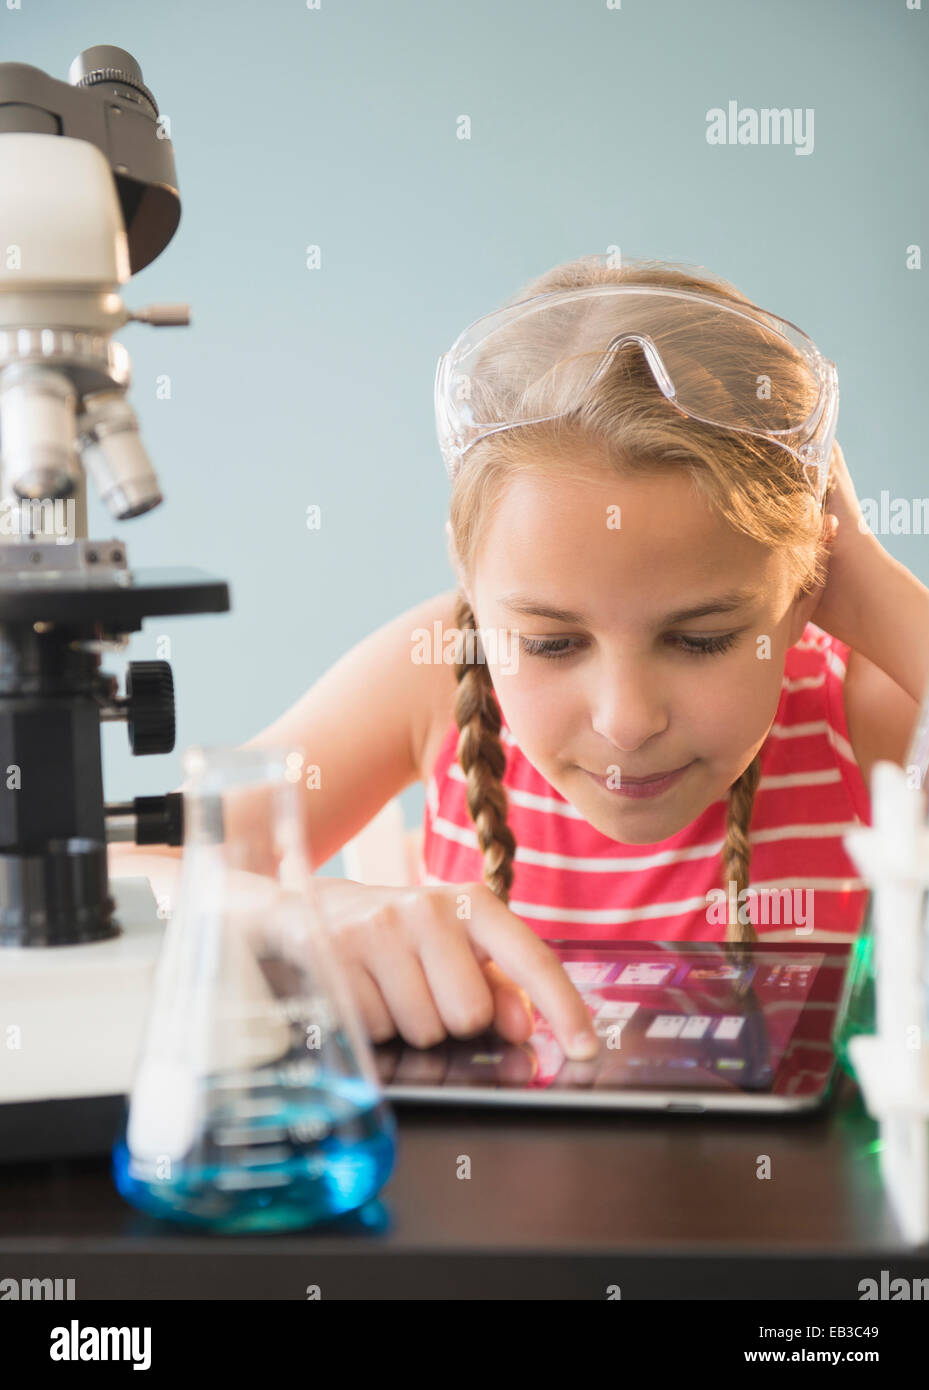 Caucasian girl using digital tablet in science lab Stock Photo